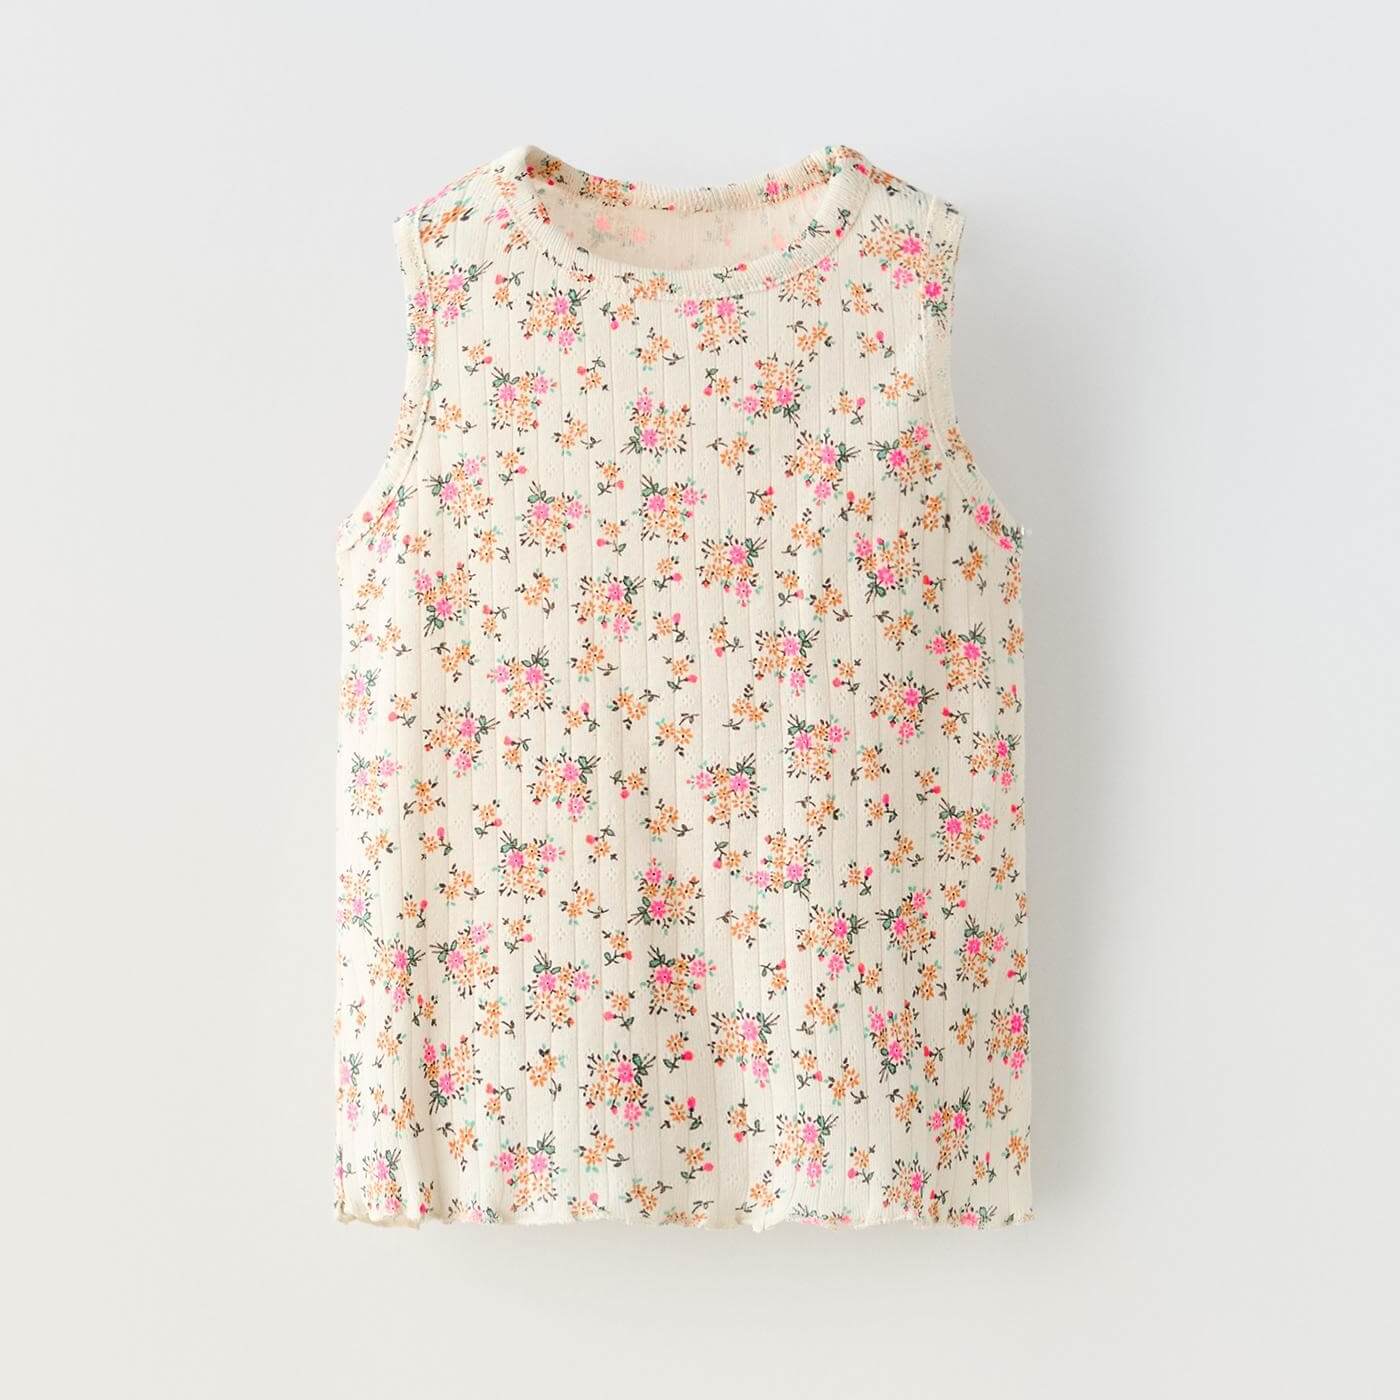 Топ Zara Floral Open-knit, бежевый топ zara knit with floral beads розовый